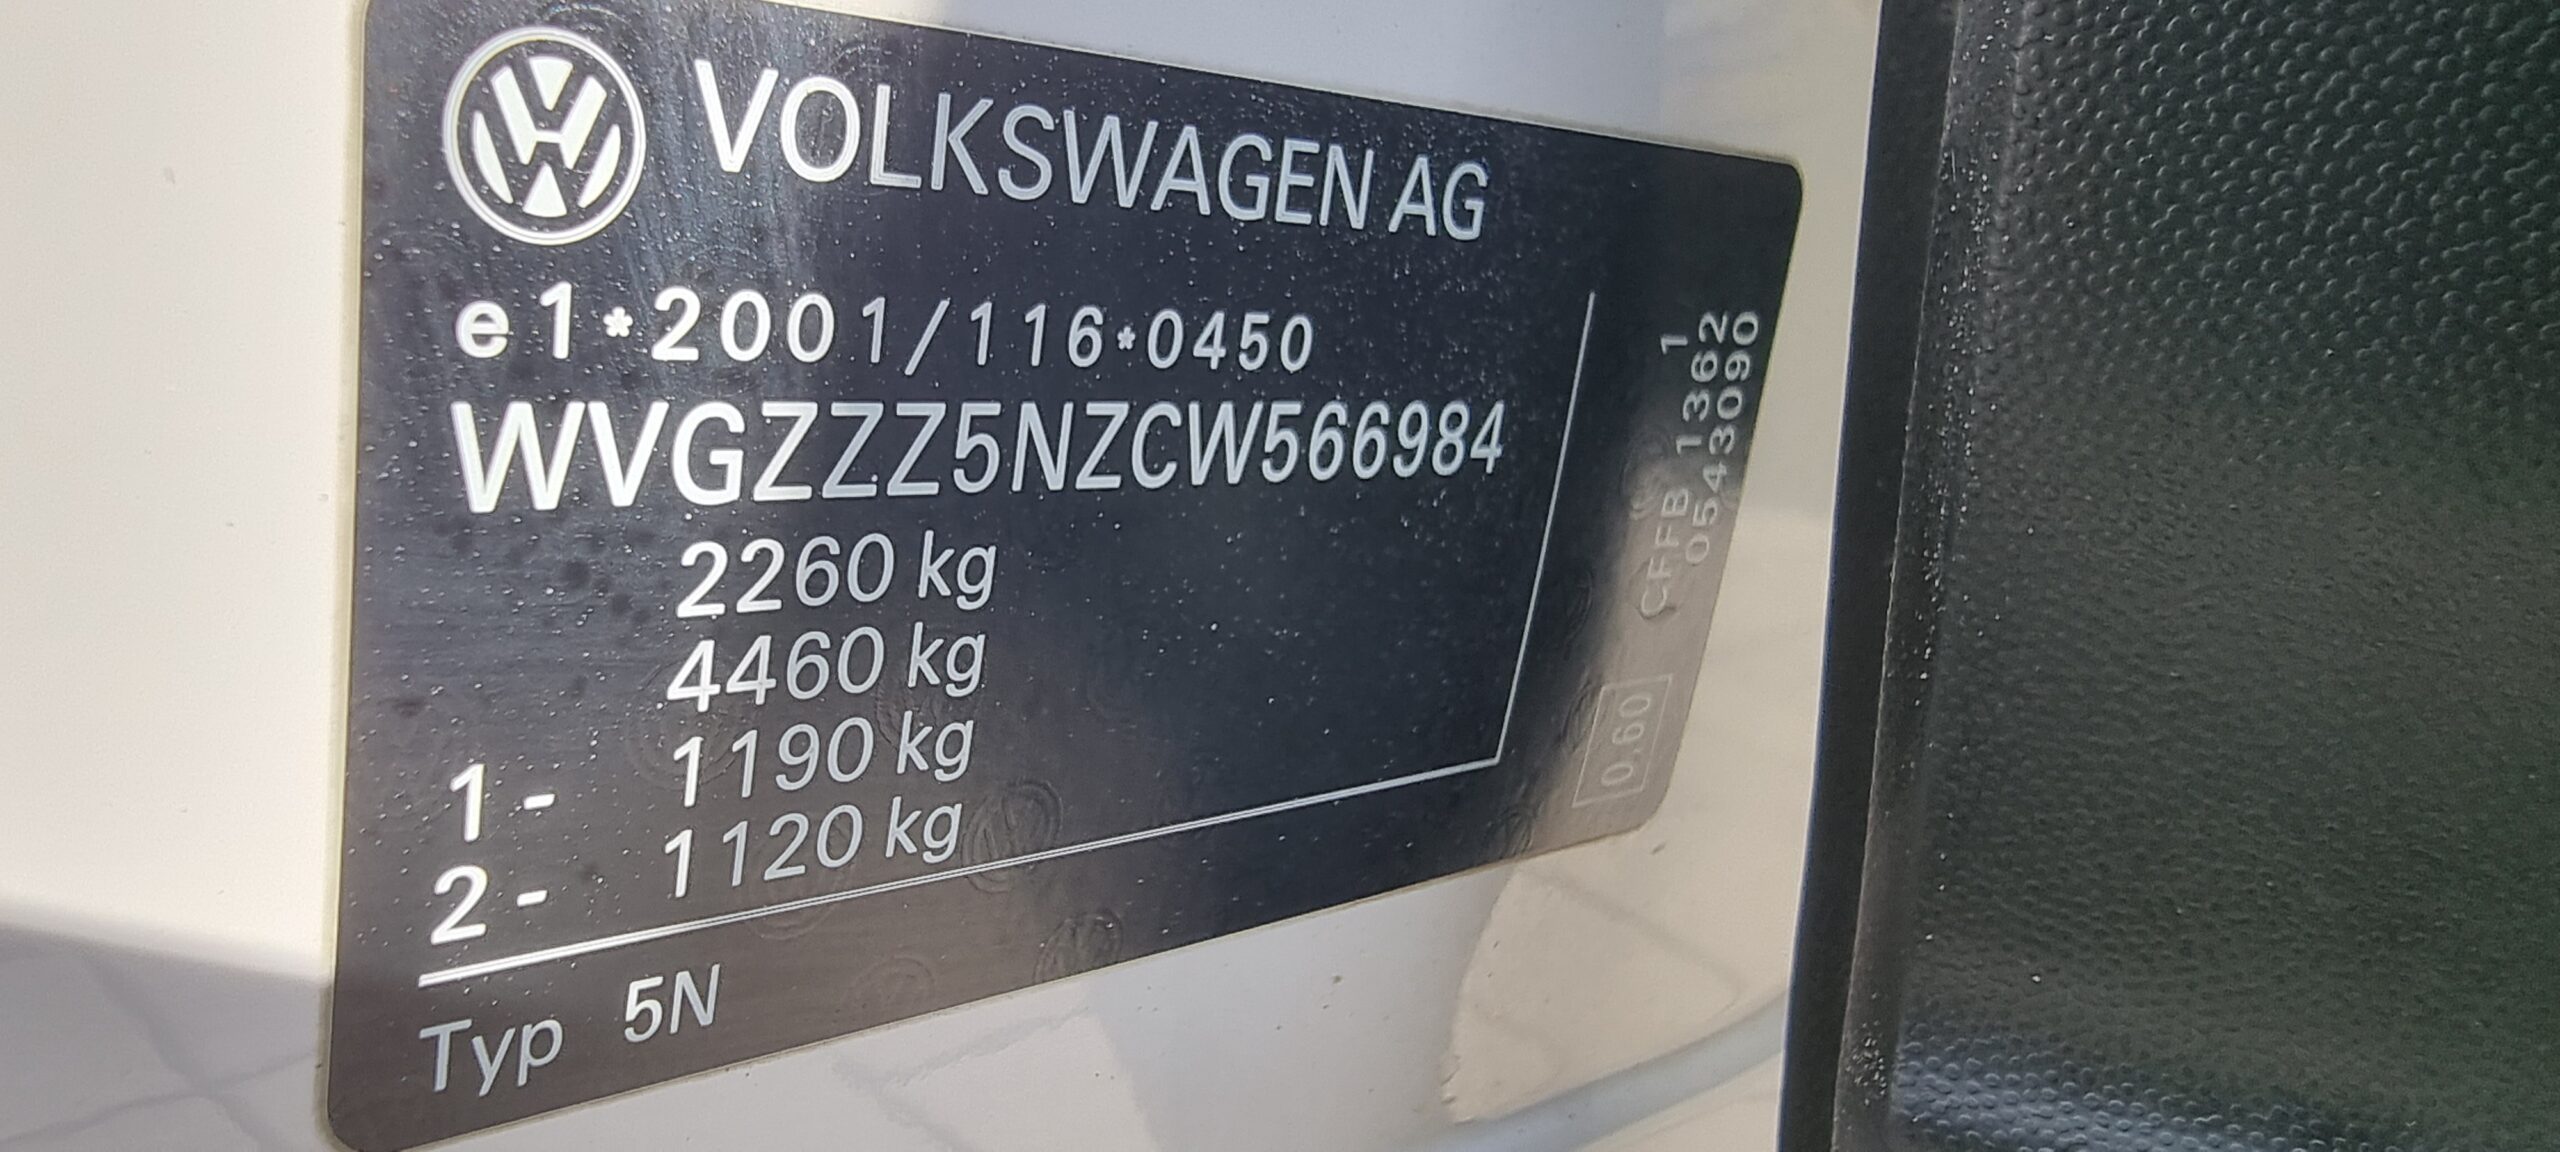 VW TIGUAN 4 MOTION, DSG, 2.0 TDI, 140 CP, EURO 5, AN 2012